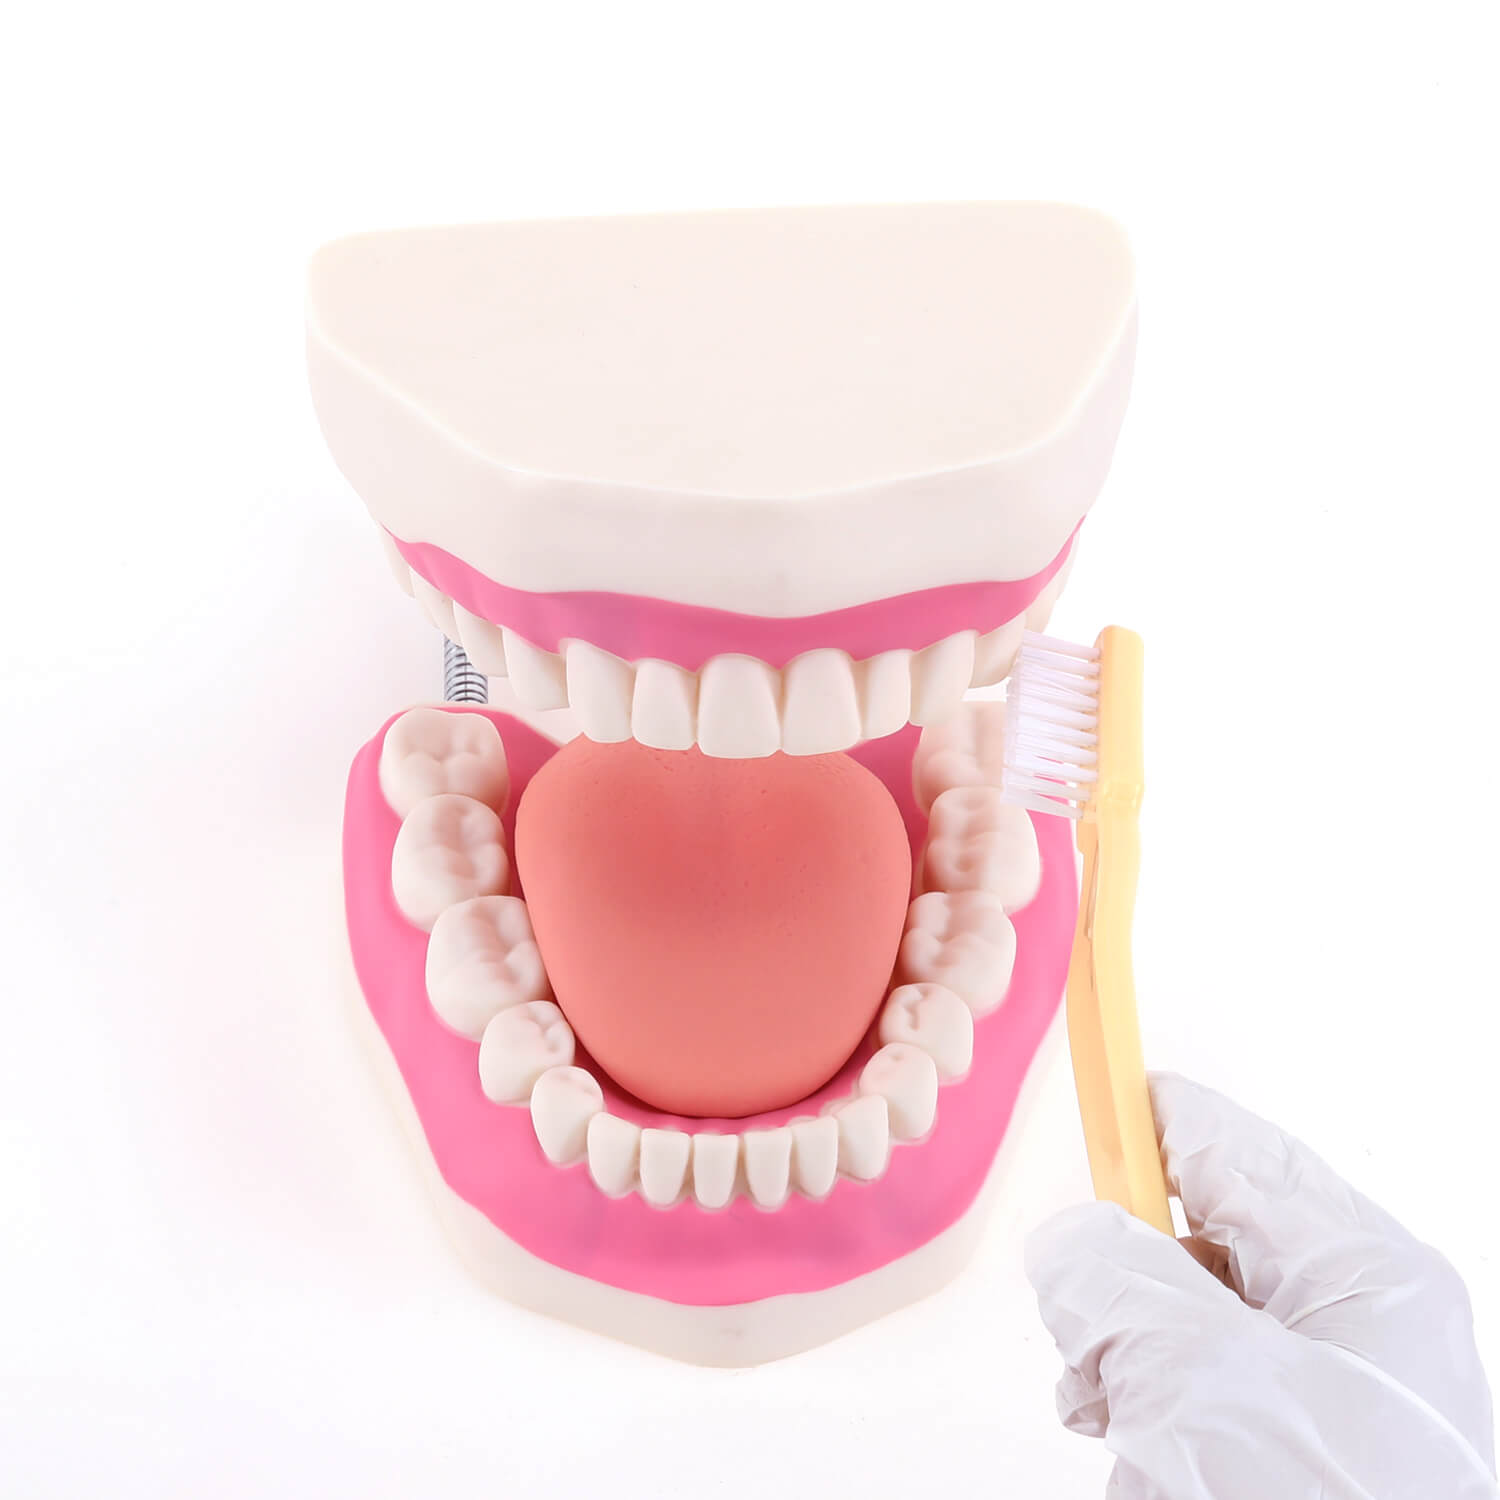 RONTEN,Dental Teeth Care Model-Mouth Mode